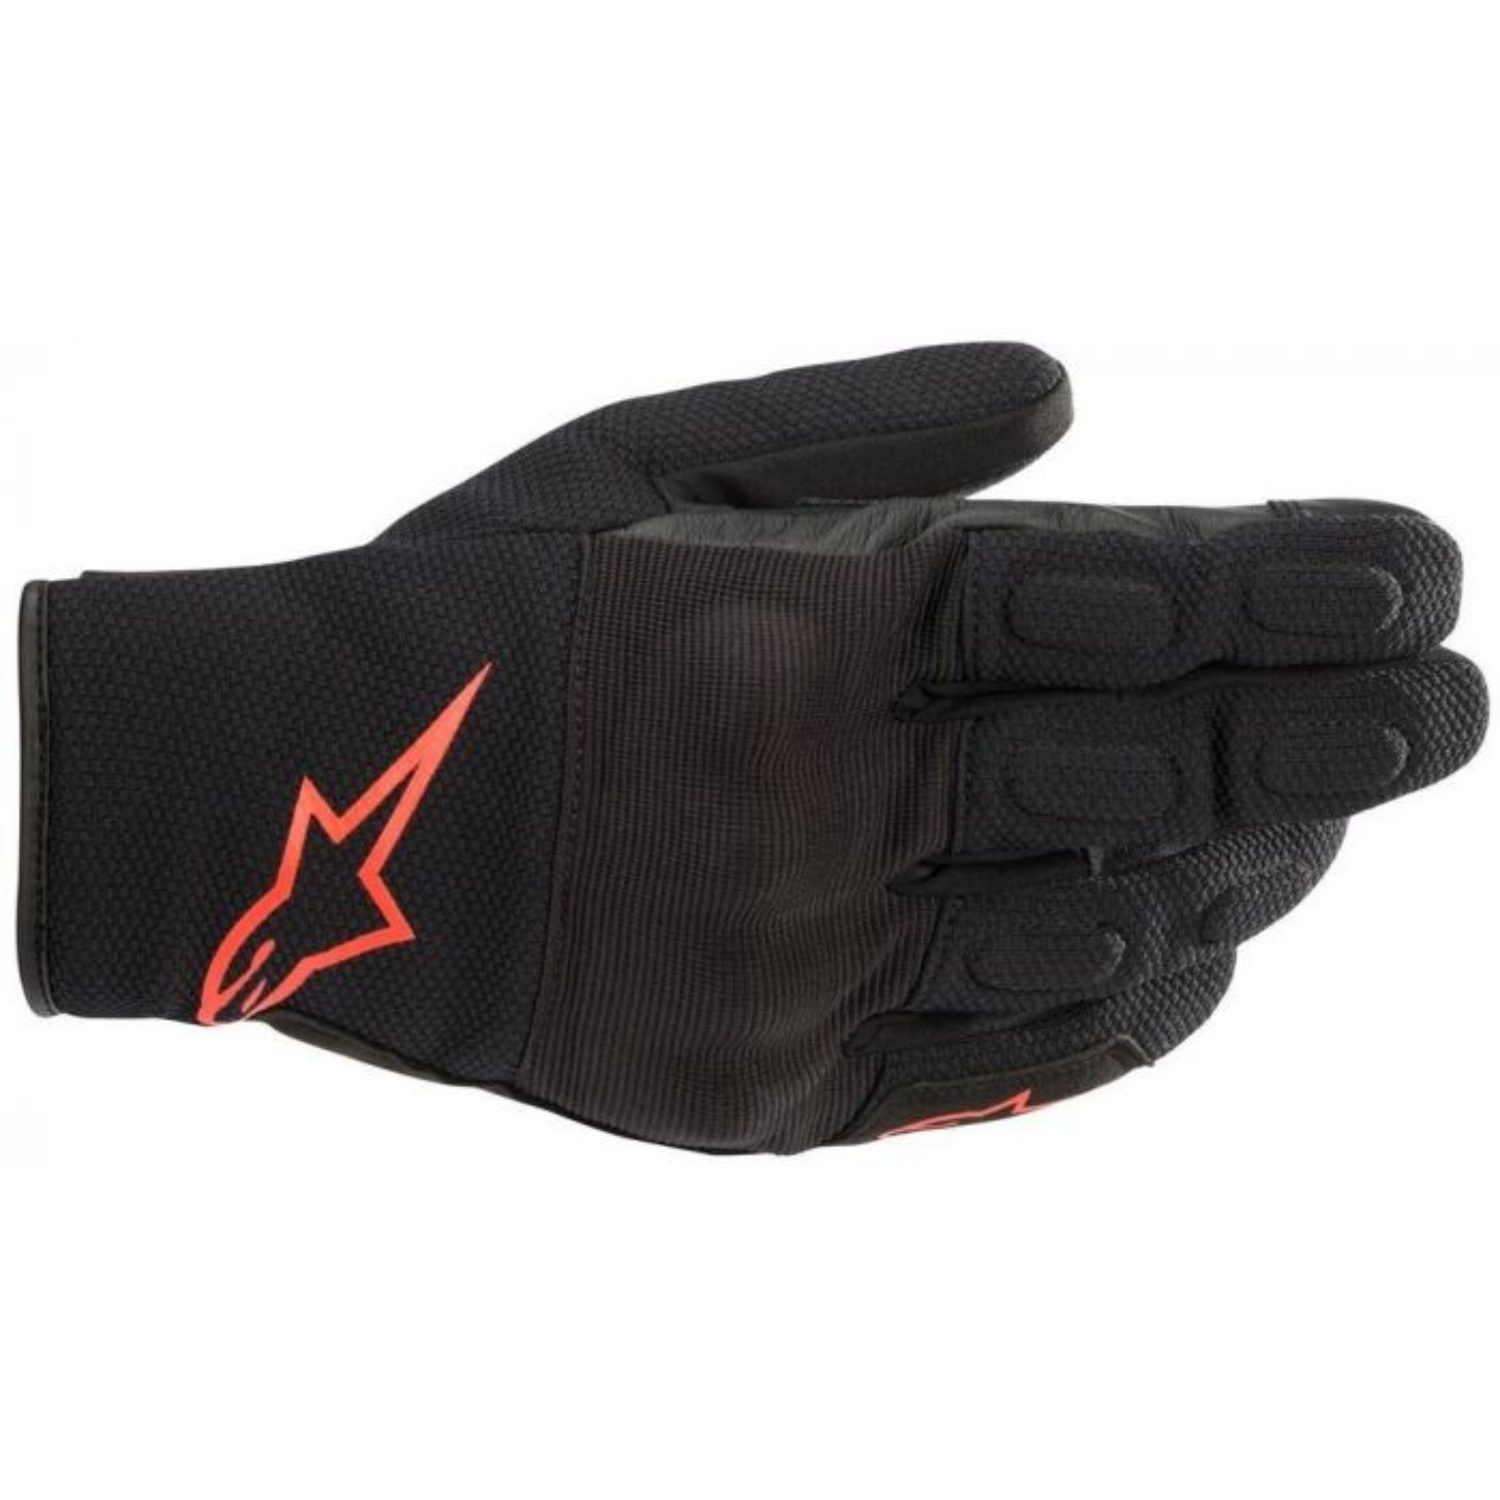 Image of Alpinestars S Max Drystar Gloves Black Red Fluo Größe M